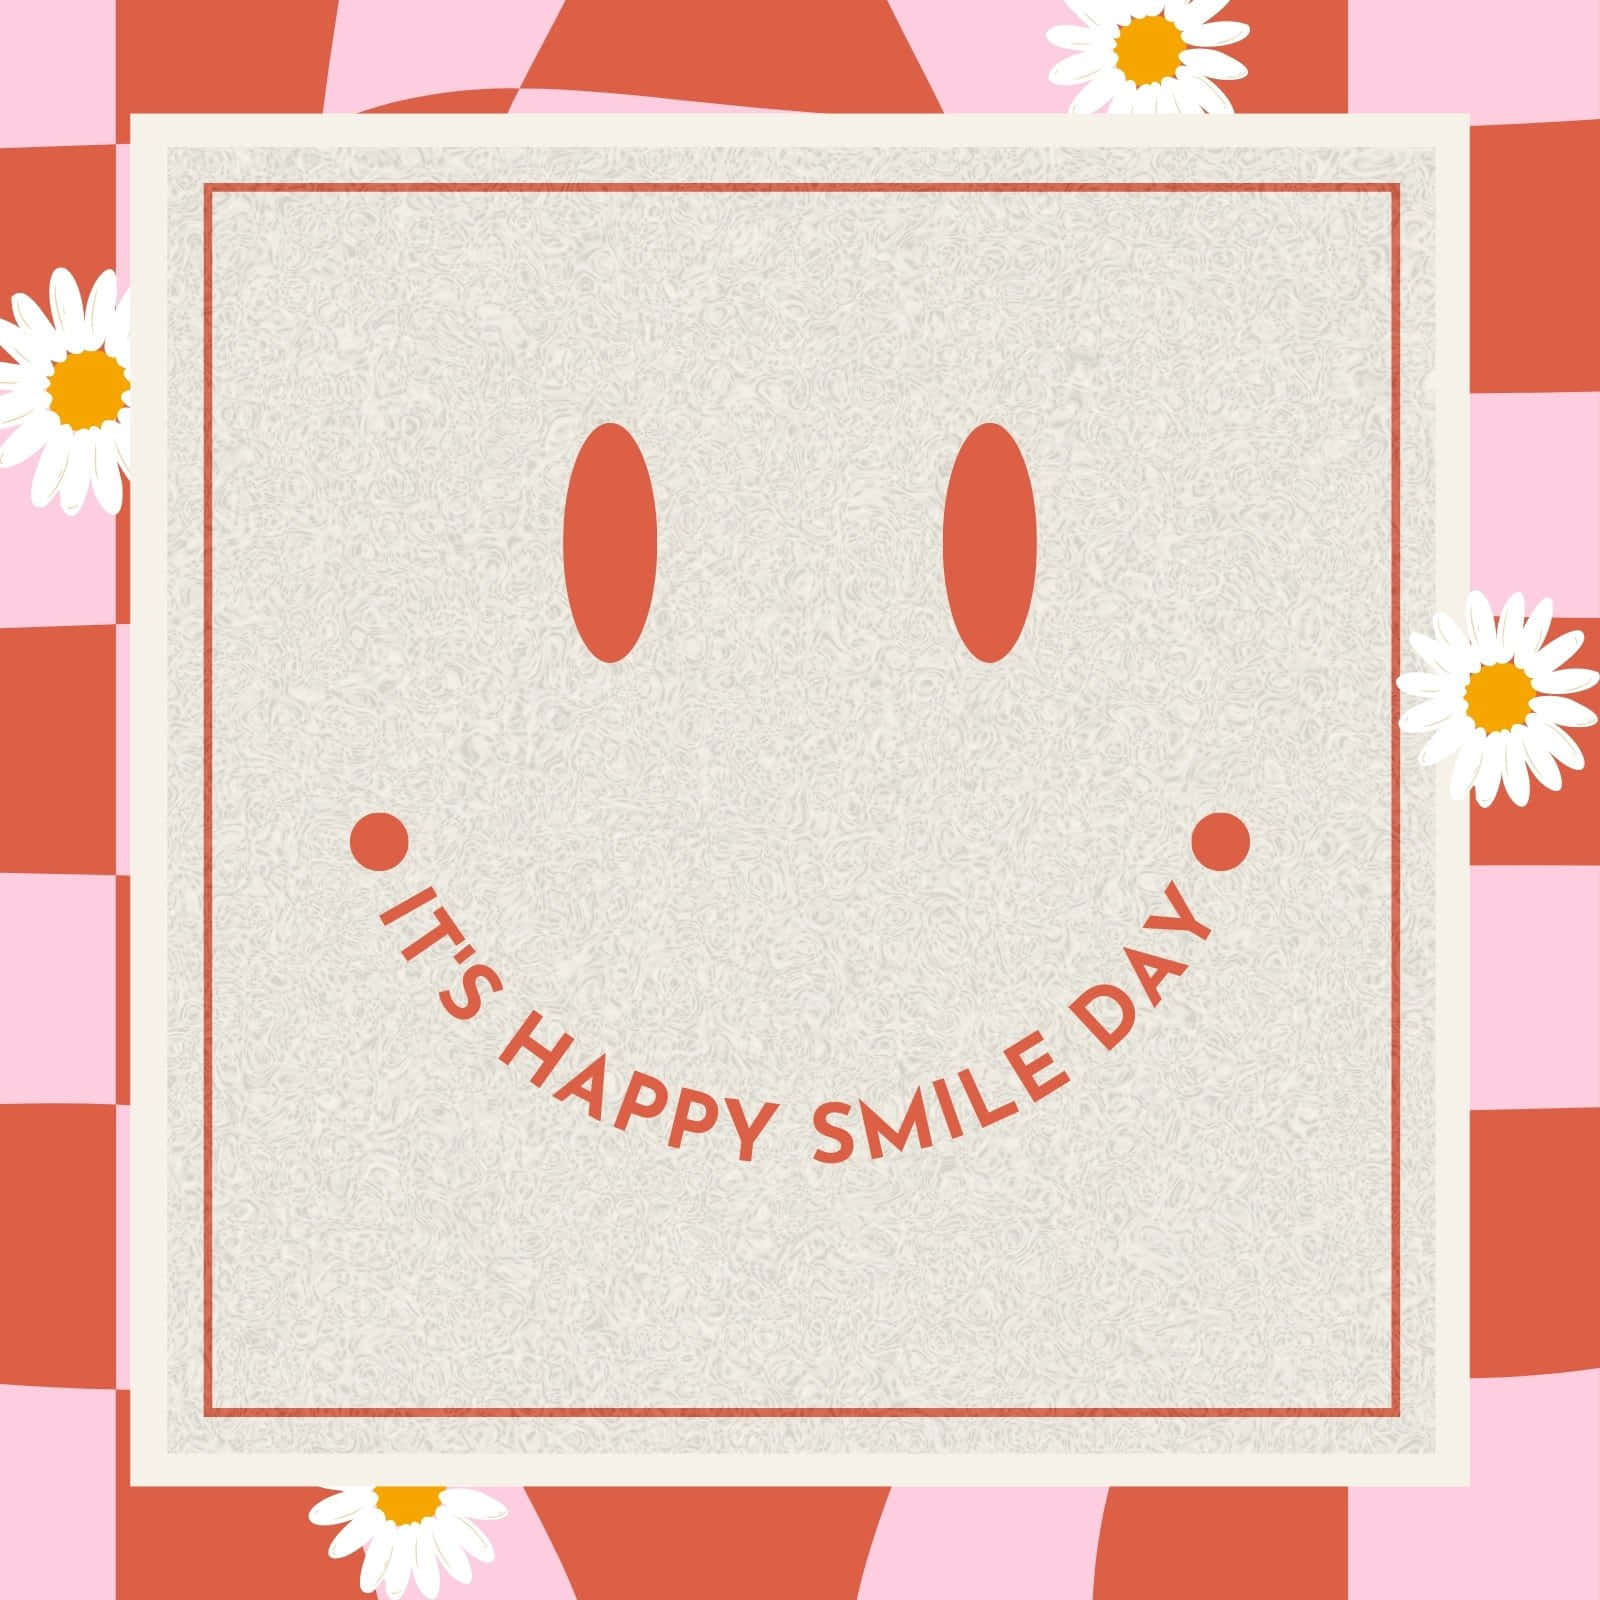 Happy Smile Day Celebration Wallpaper